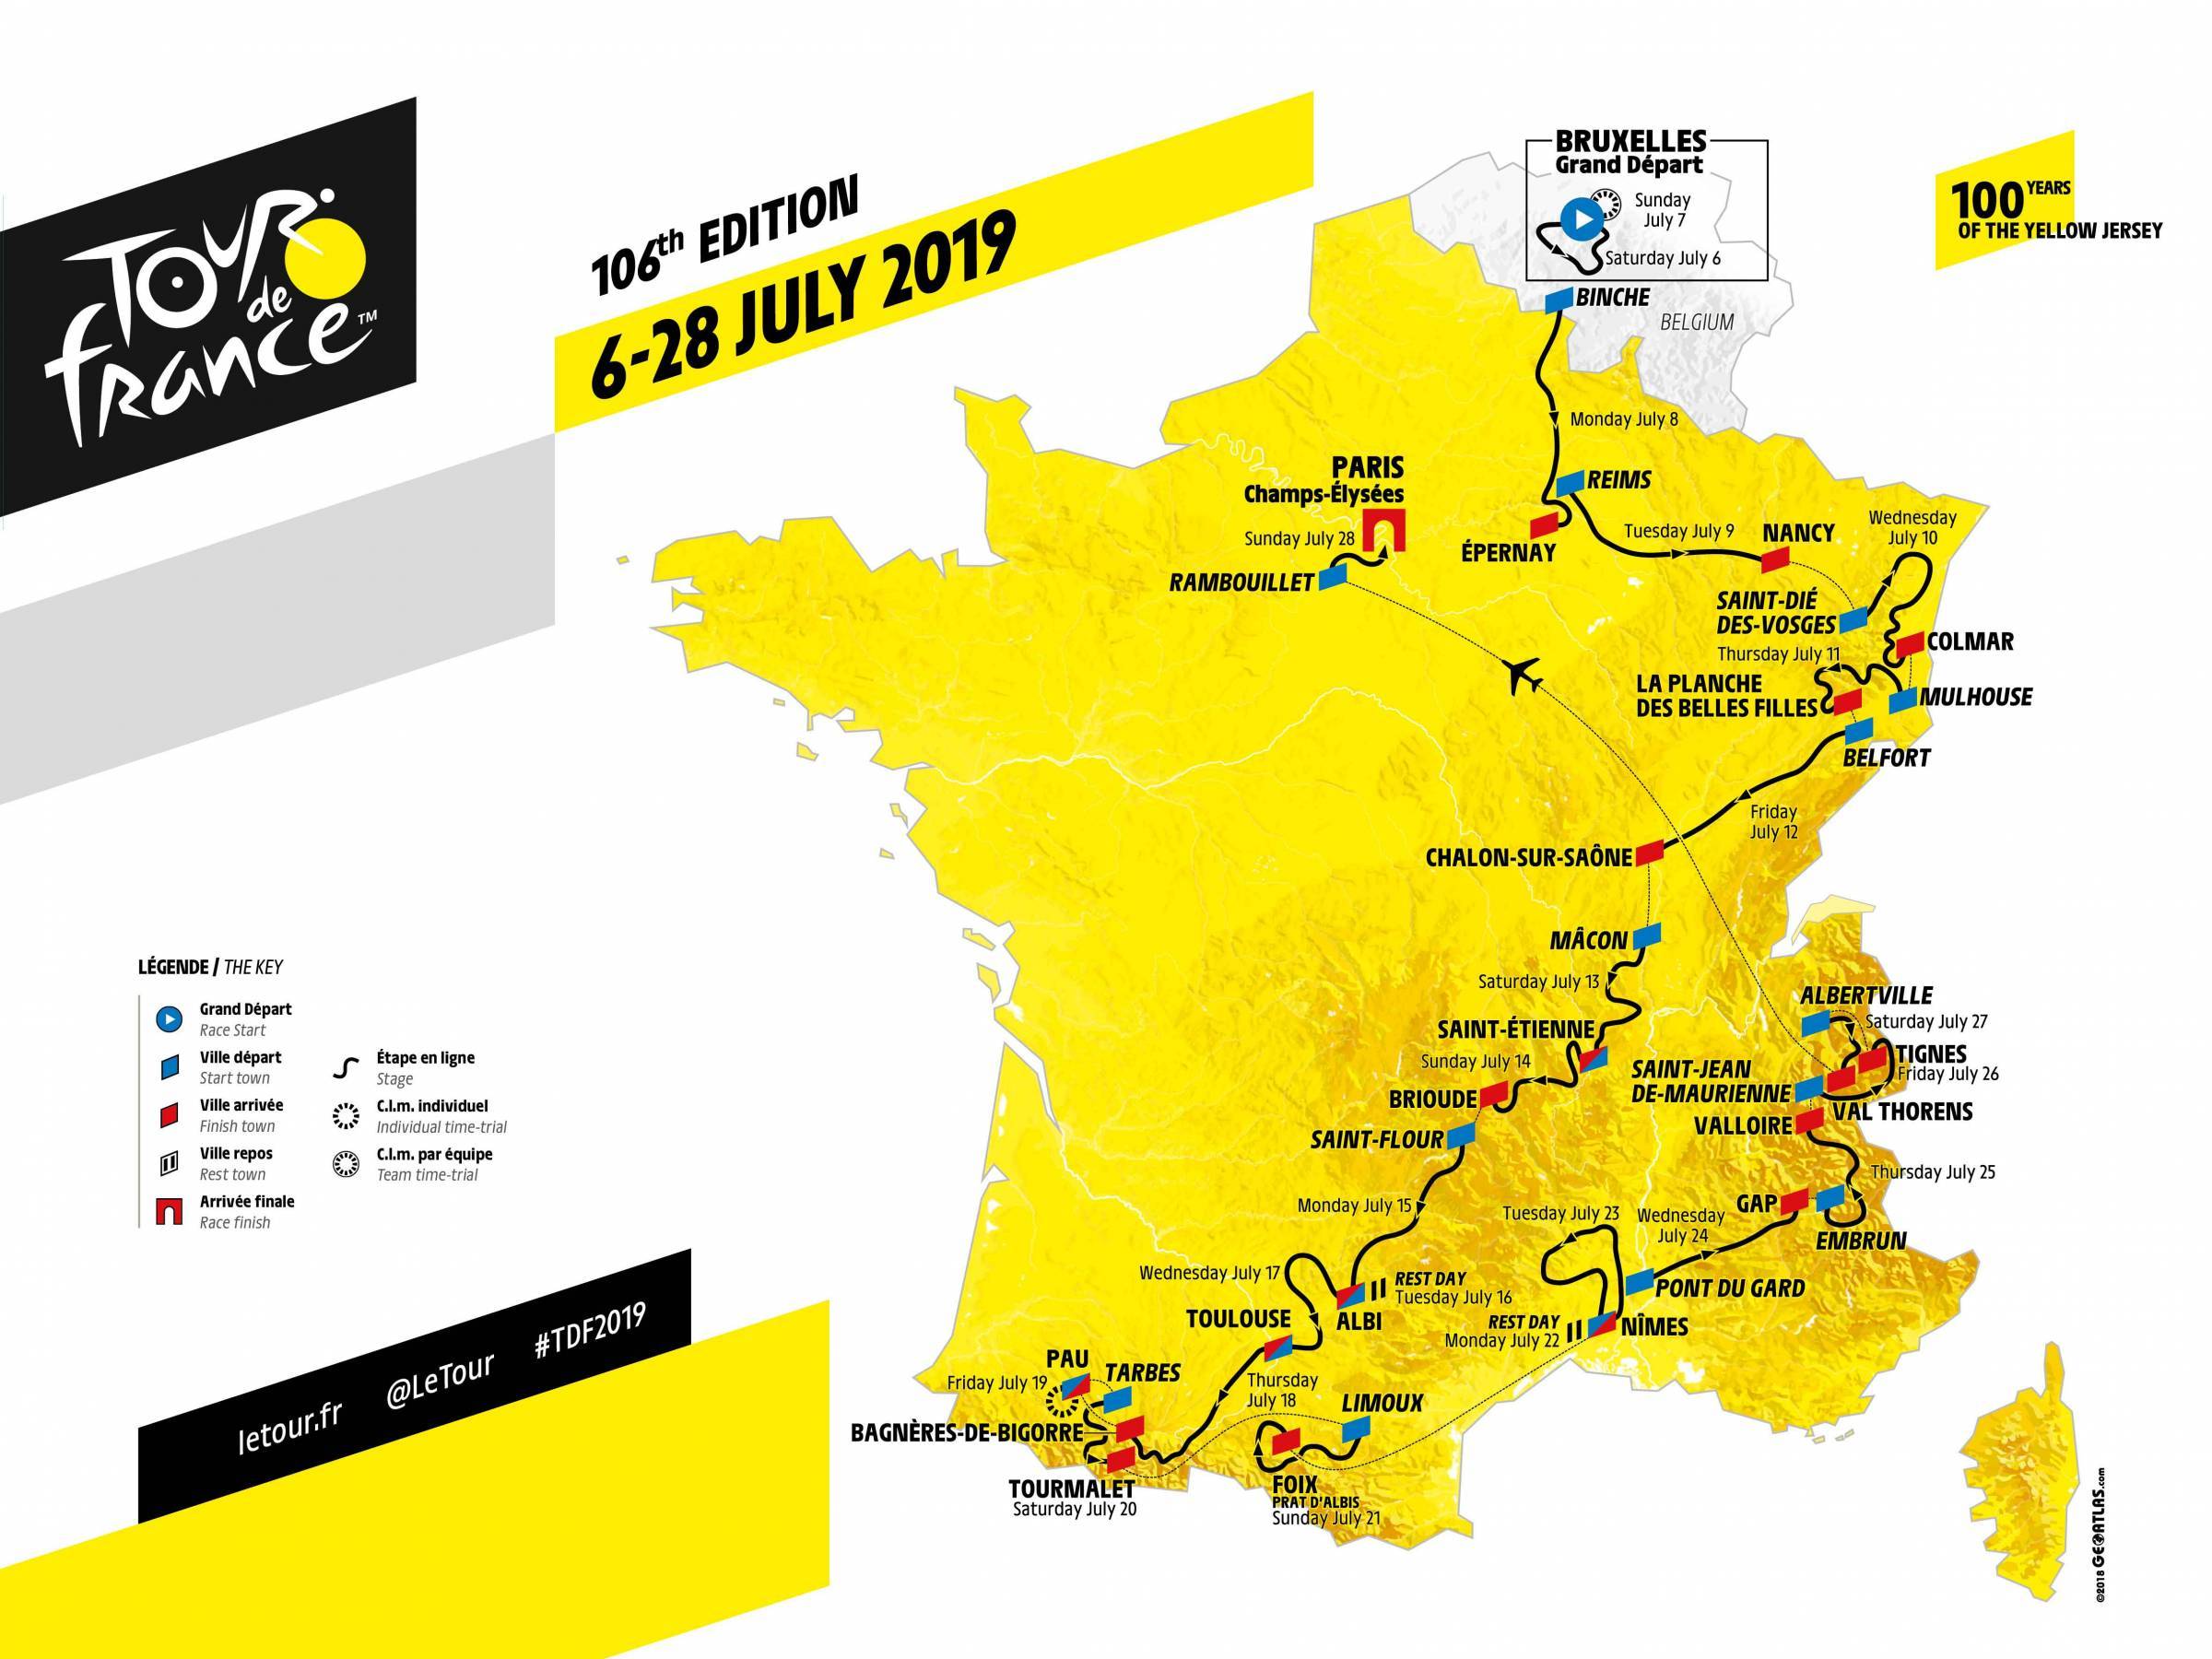 Tour de France 2019 Full schedule, stages, route, length, TV channel